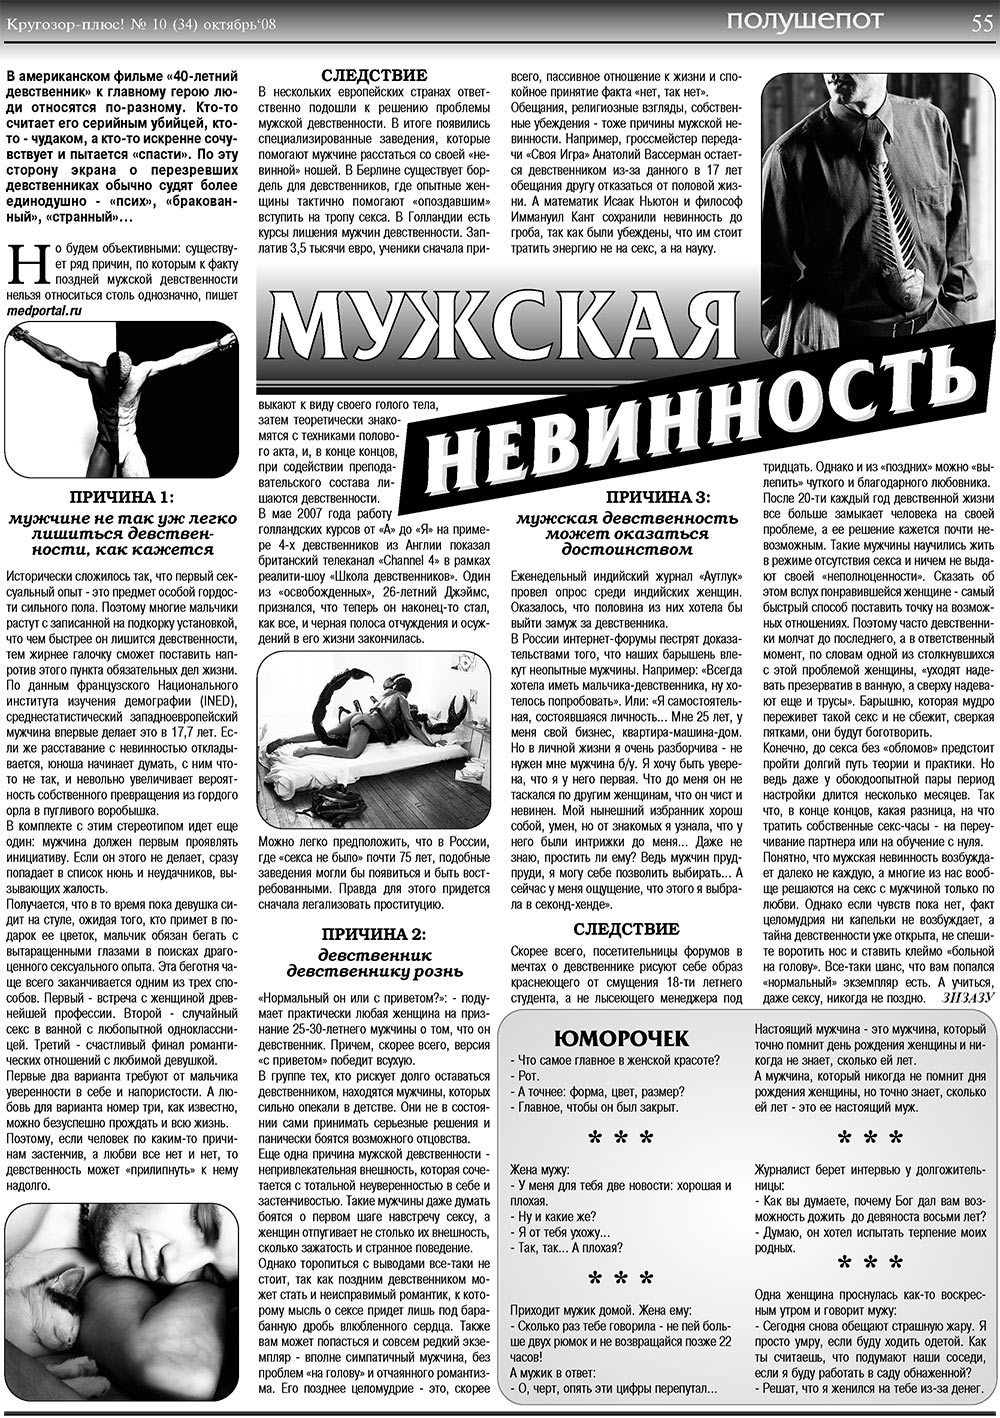 Кругозор плюс! (газета). 2008 год, номер 10, стр. 55